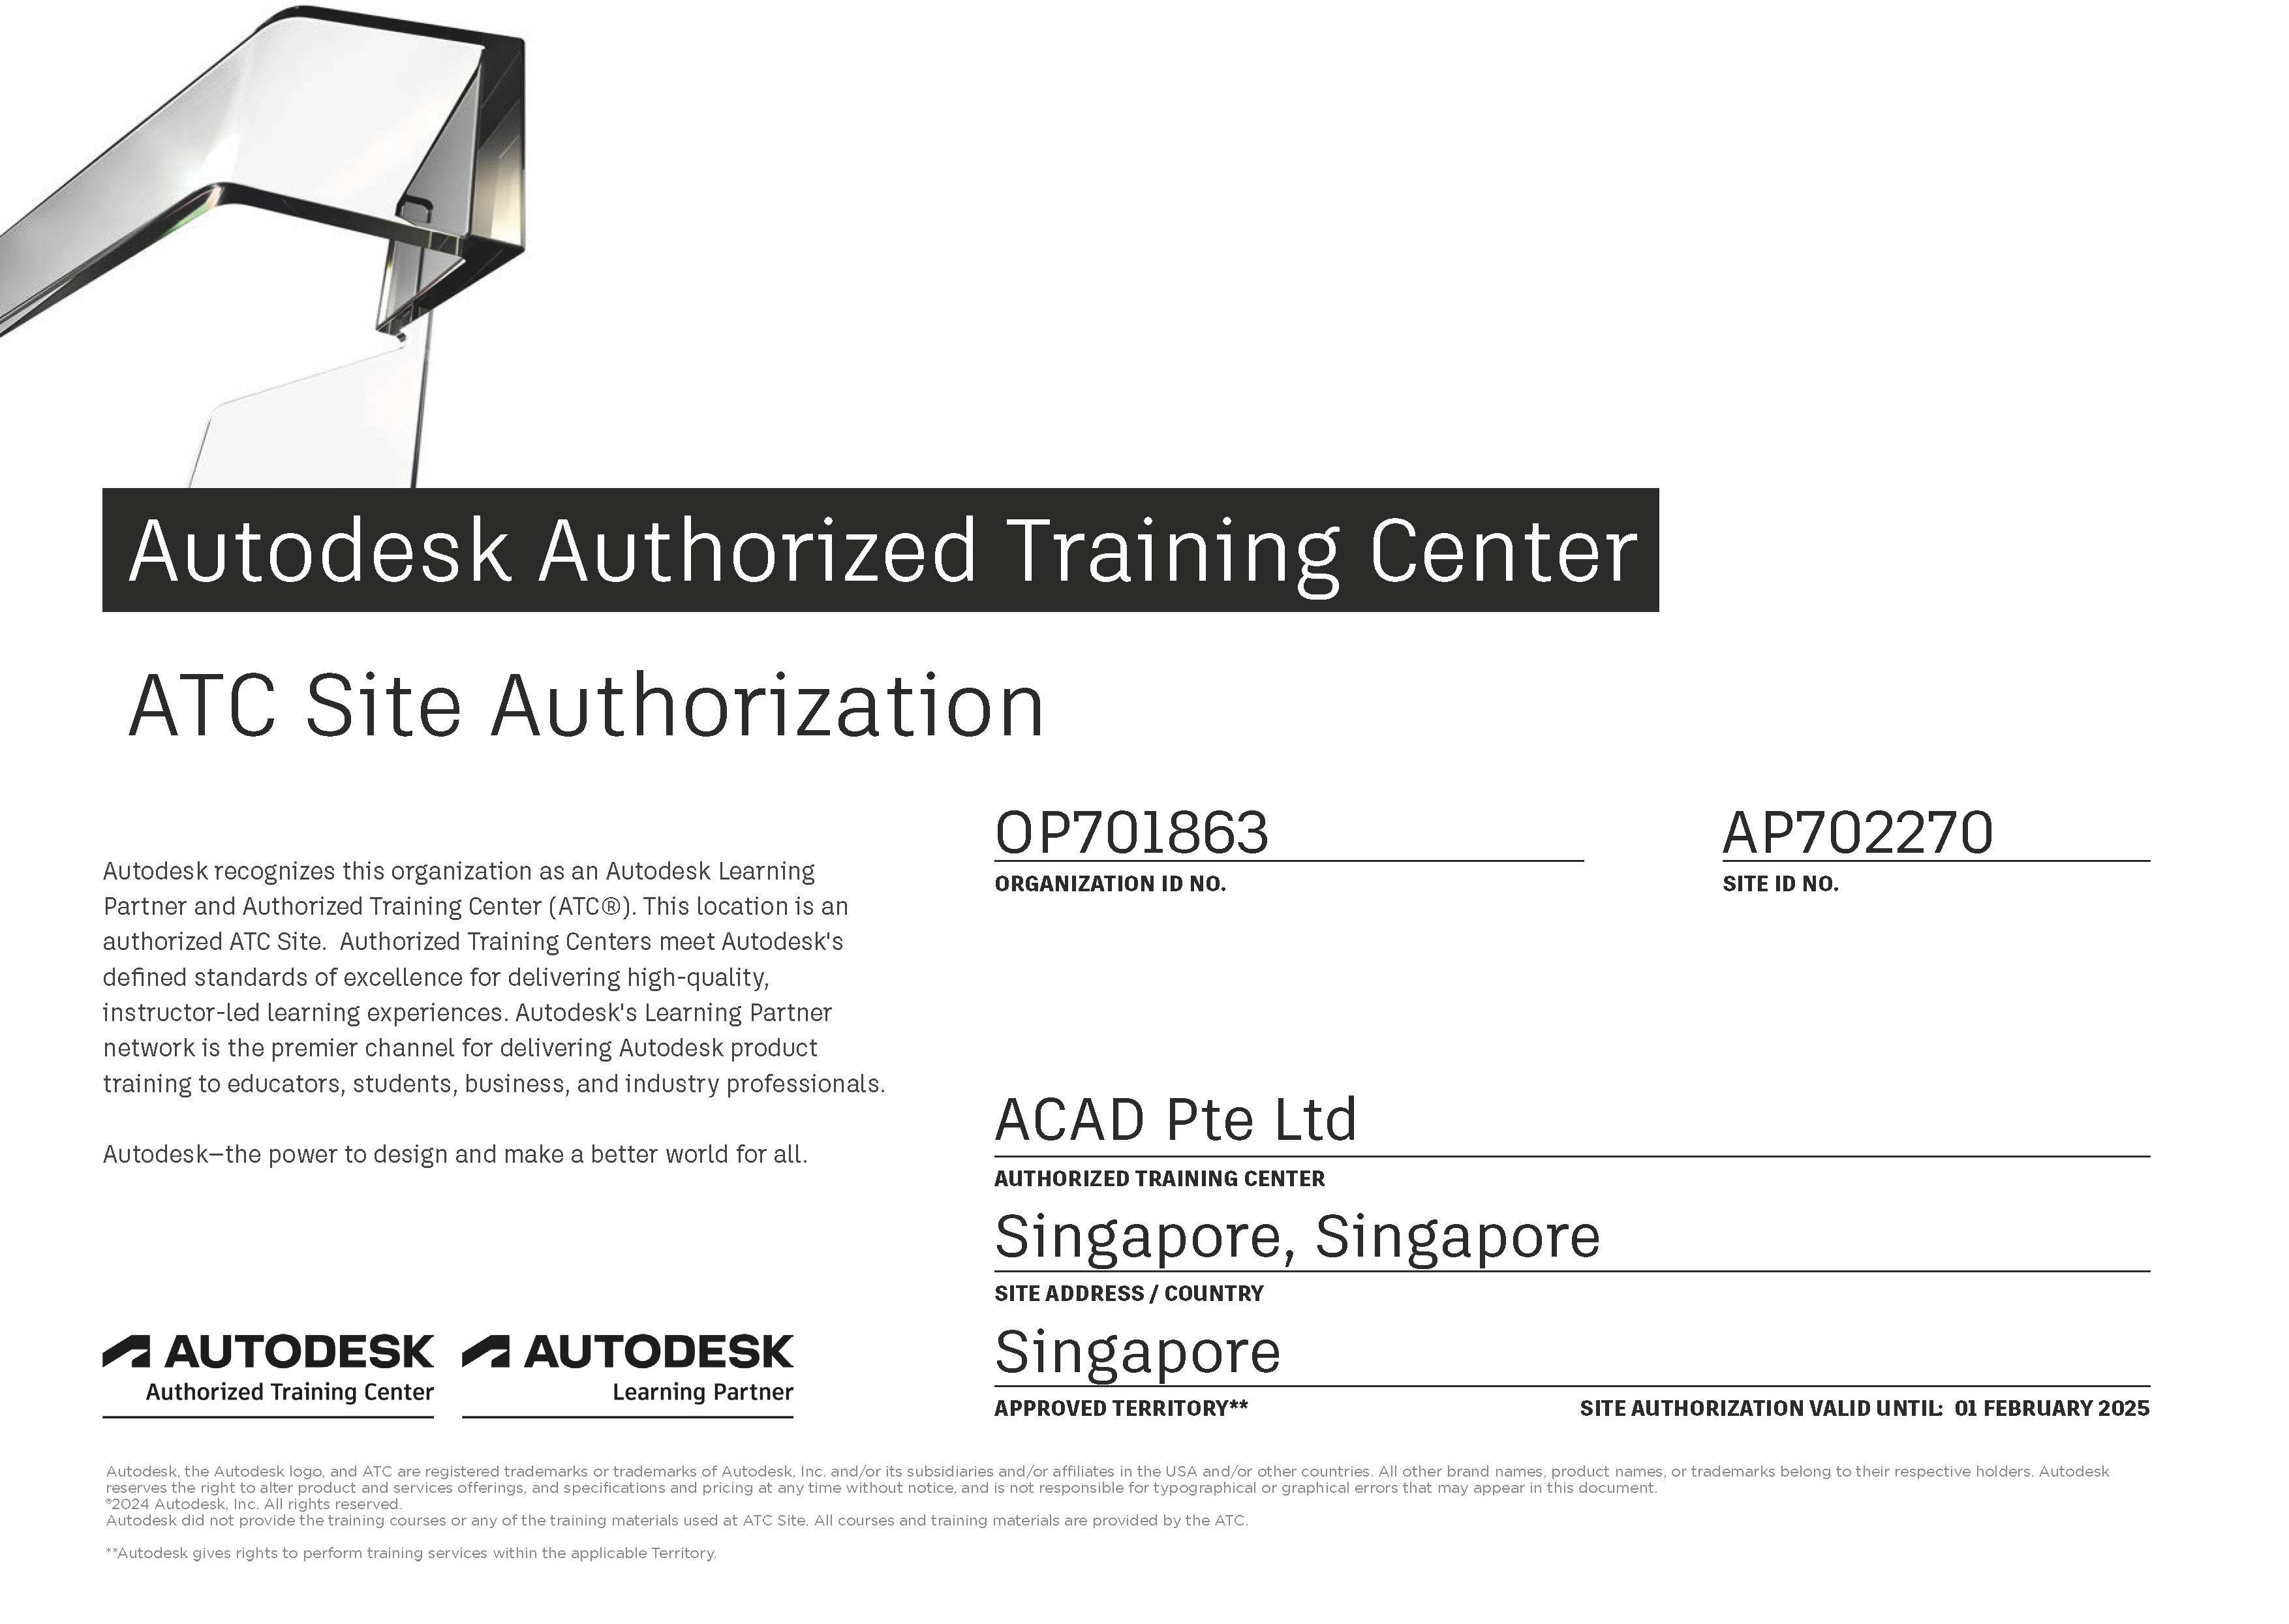 Authorized Training Centre for Autodesk